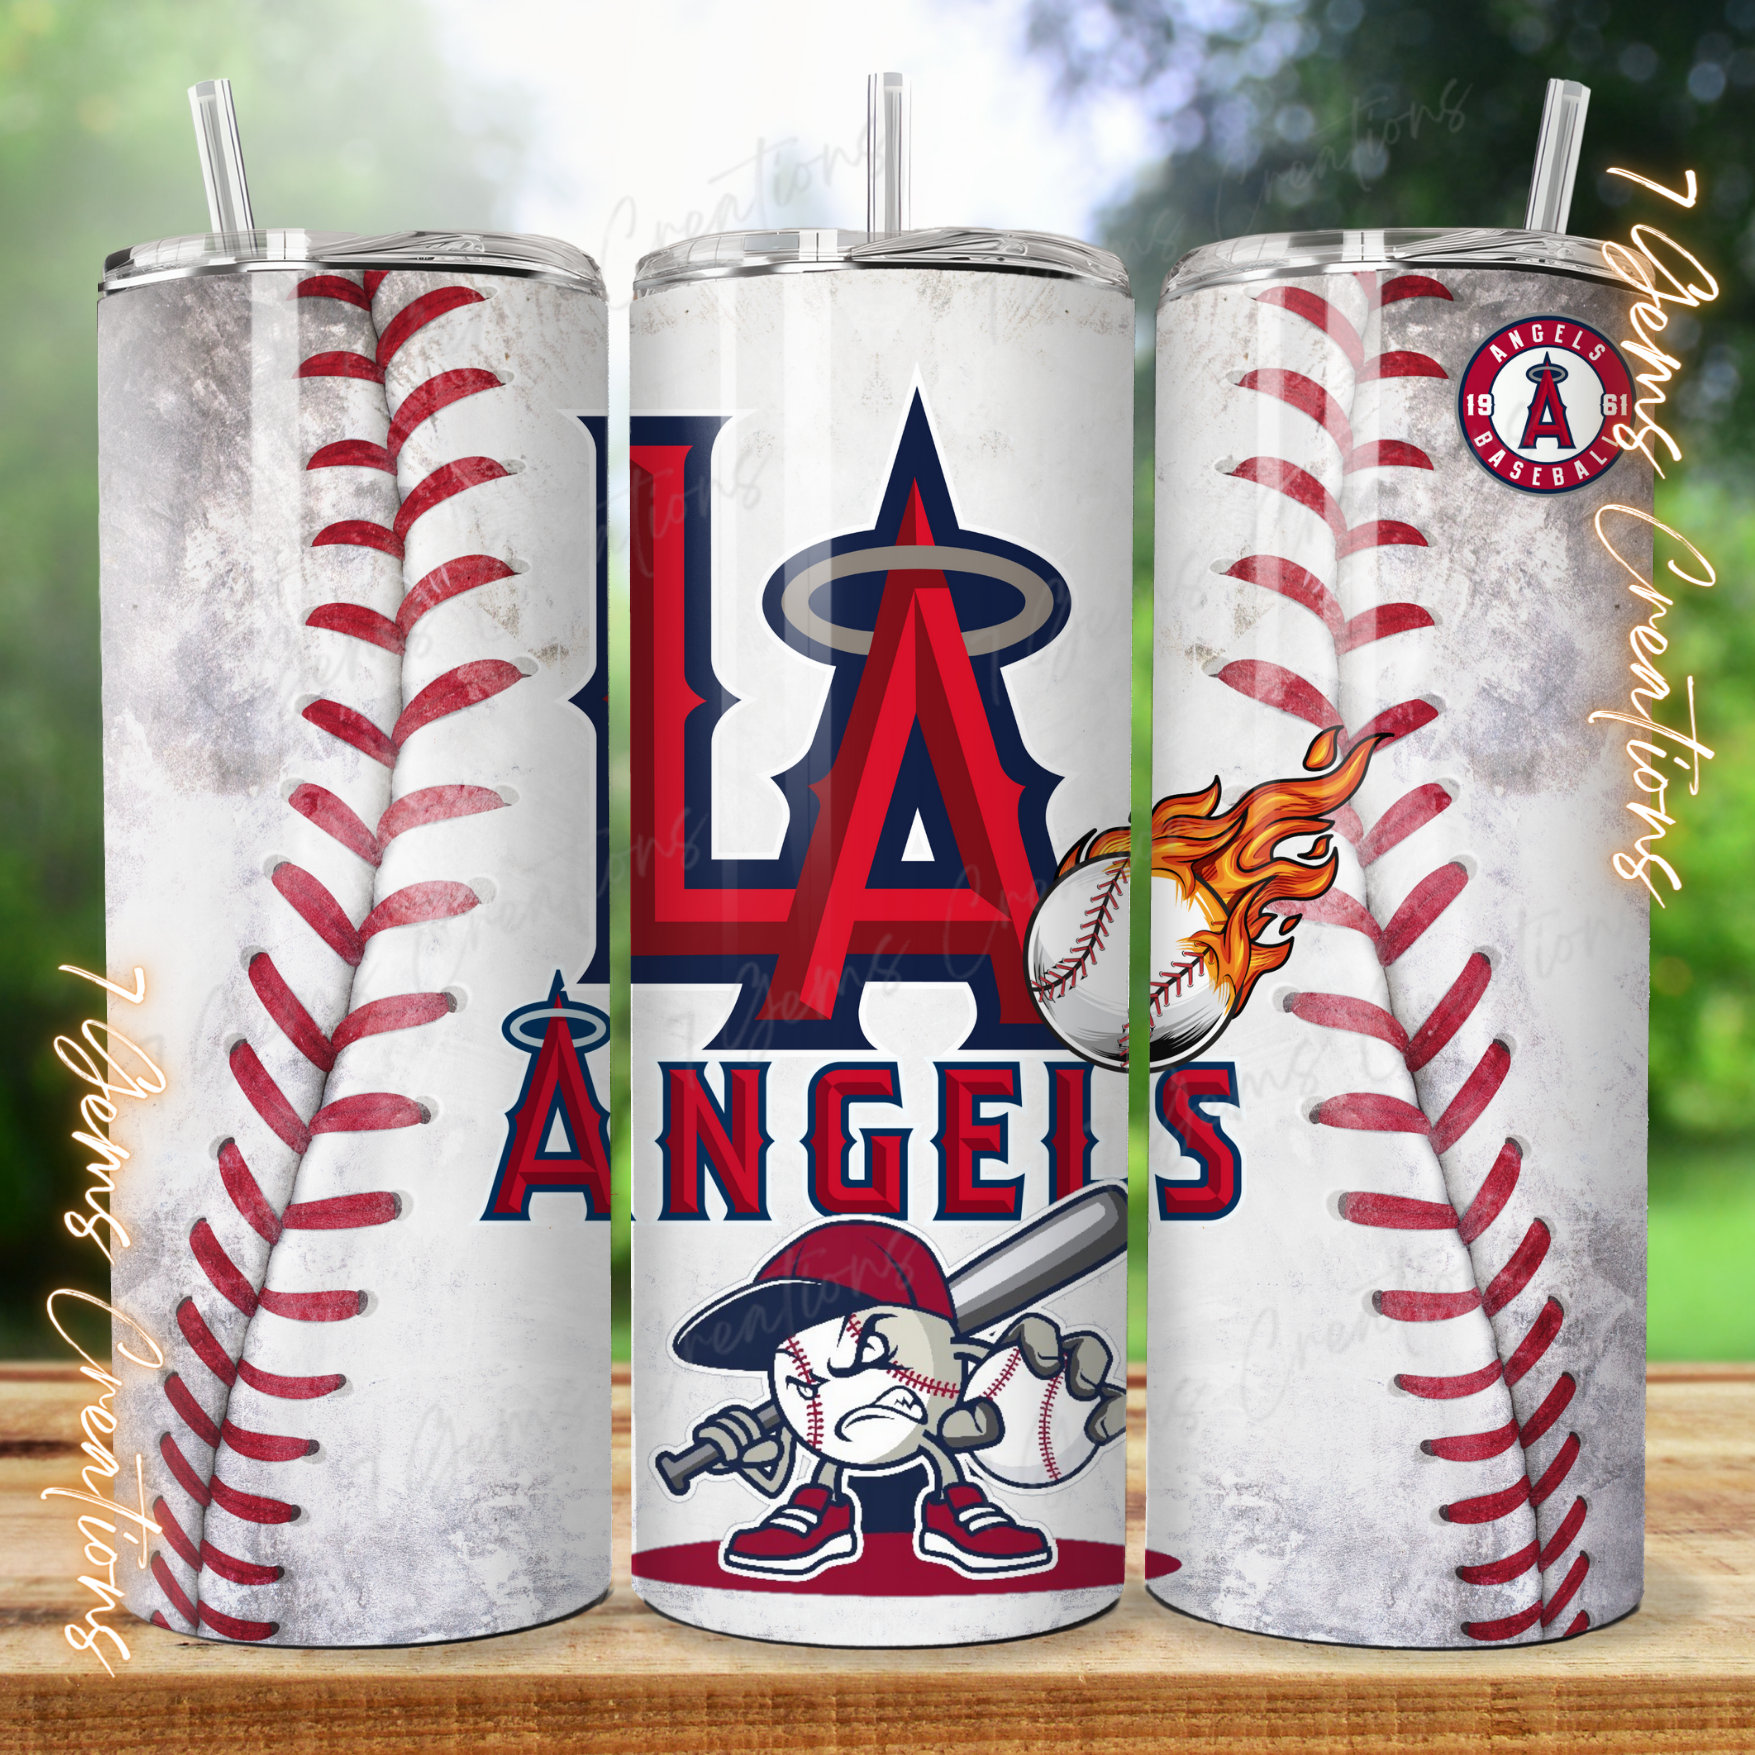 Angels Baseball Mug - Etsy